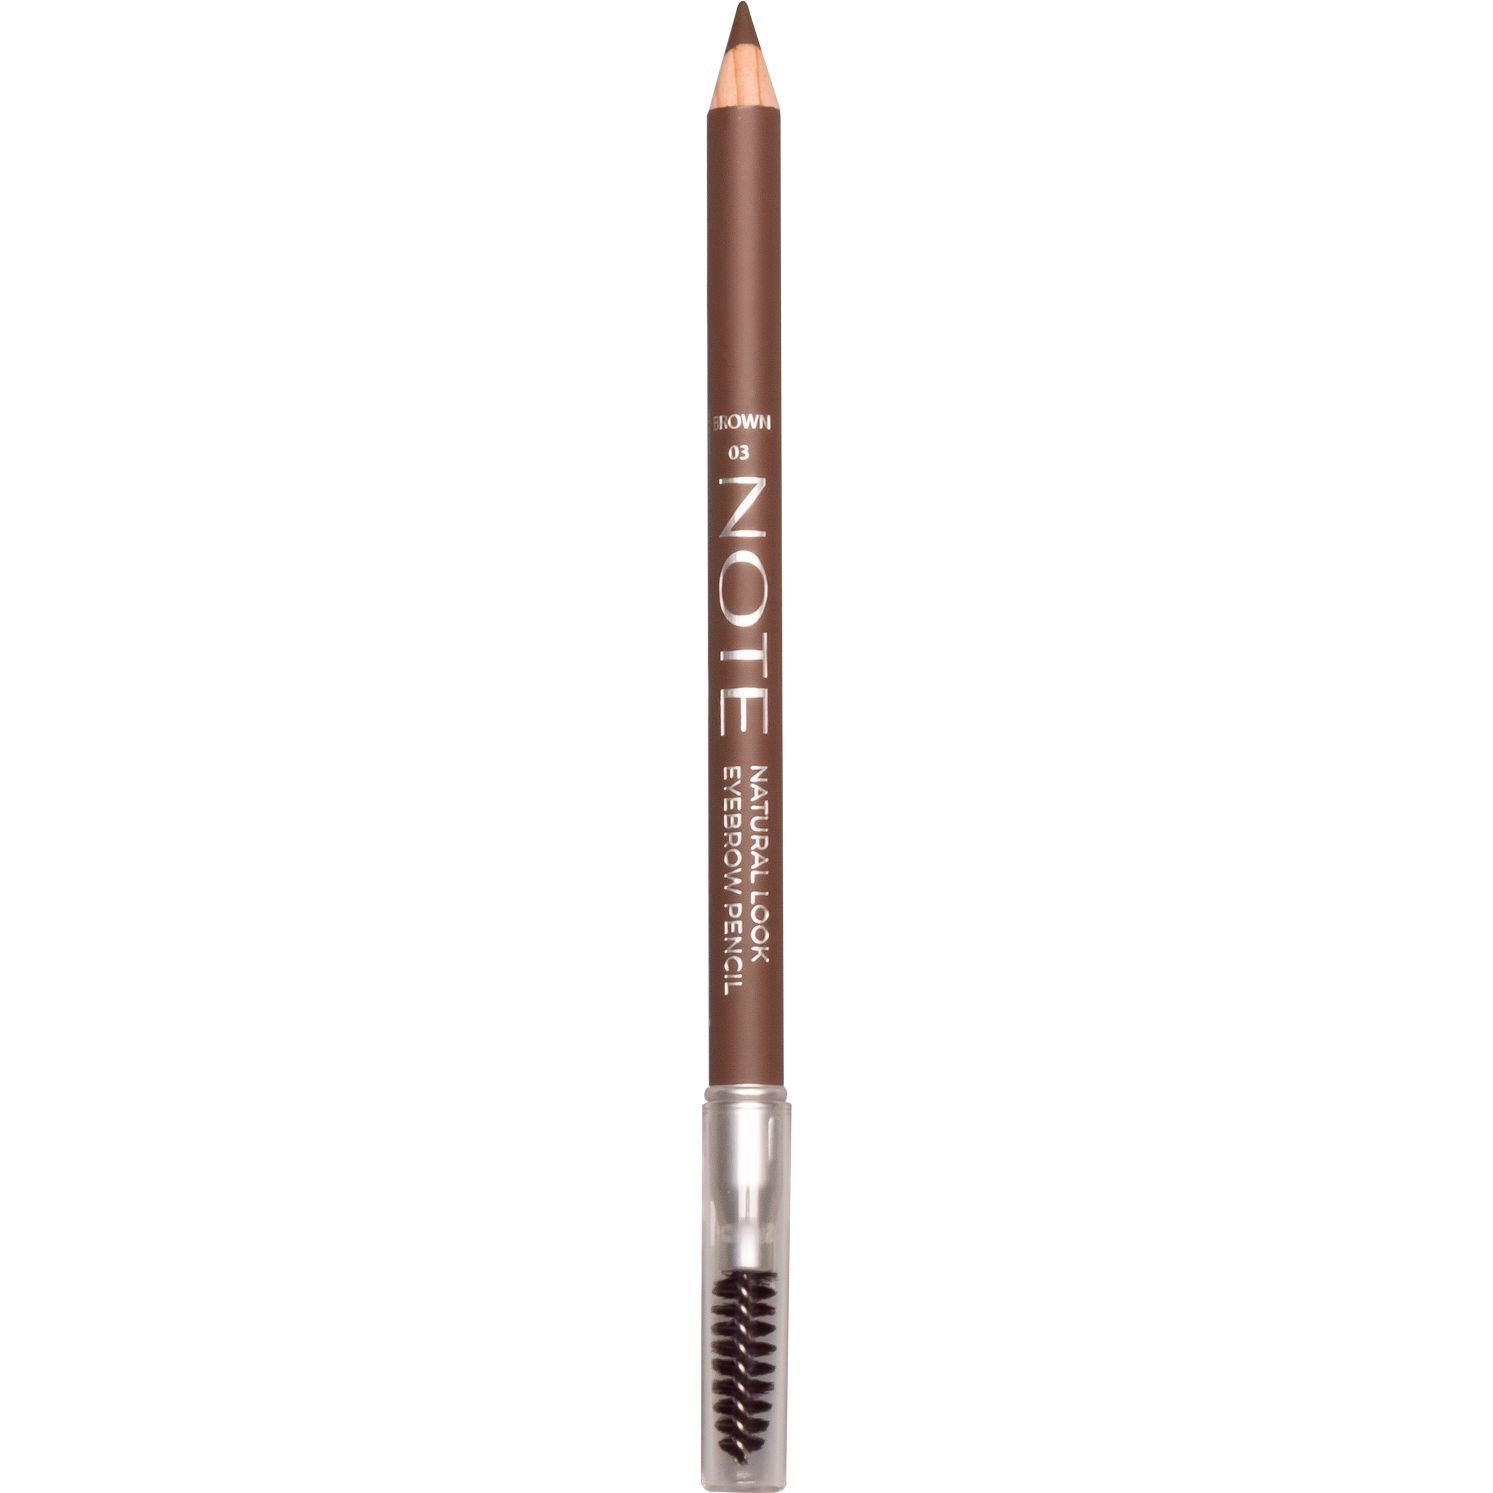 Олівець для брів Note Cosmetique Natural Look Eyebrow Pencil Brown відтінок 3, 1.08 г - фото 2